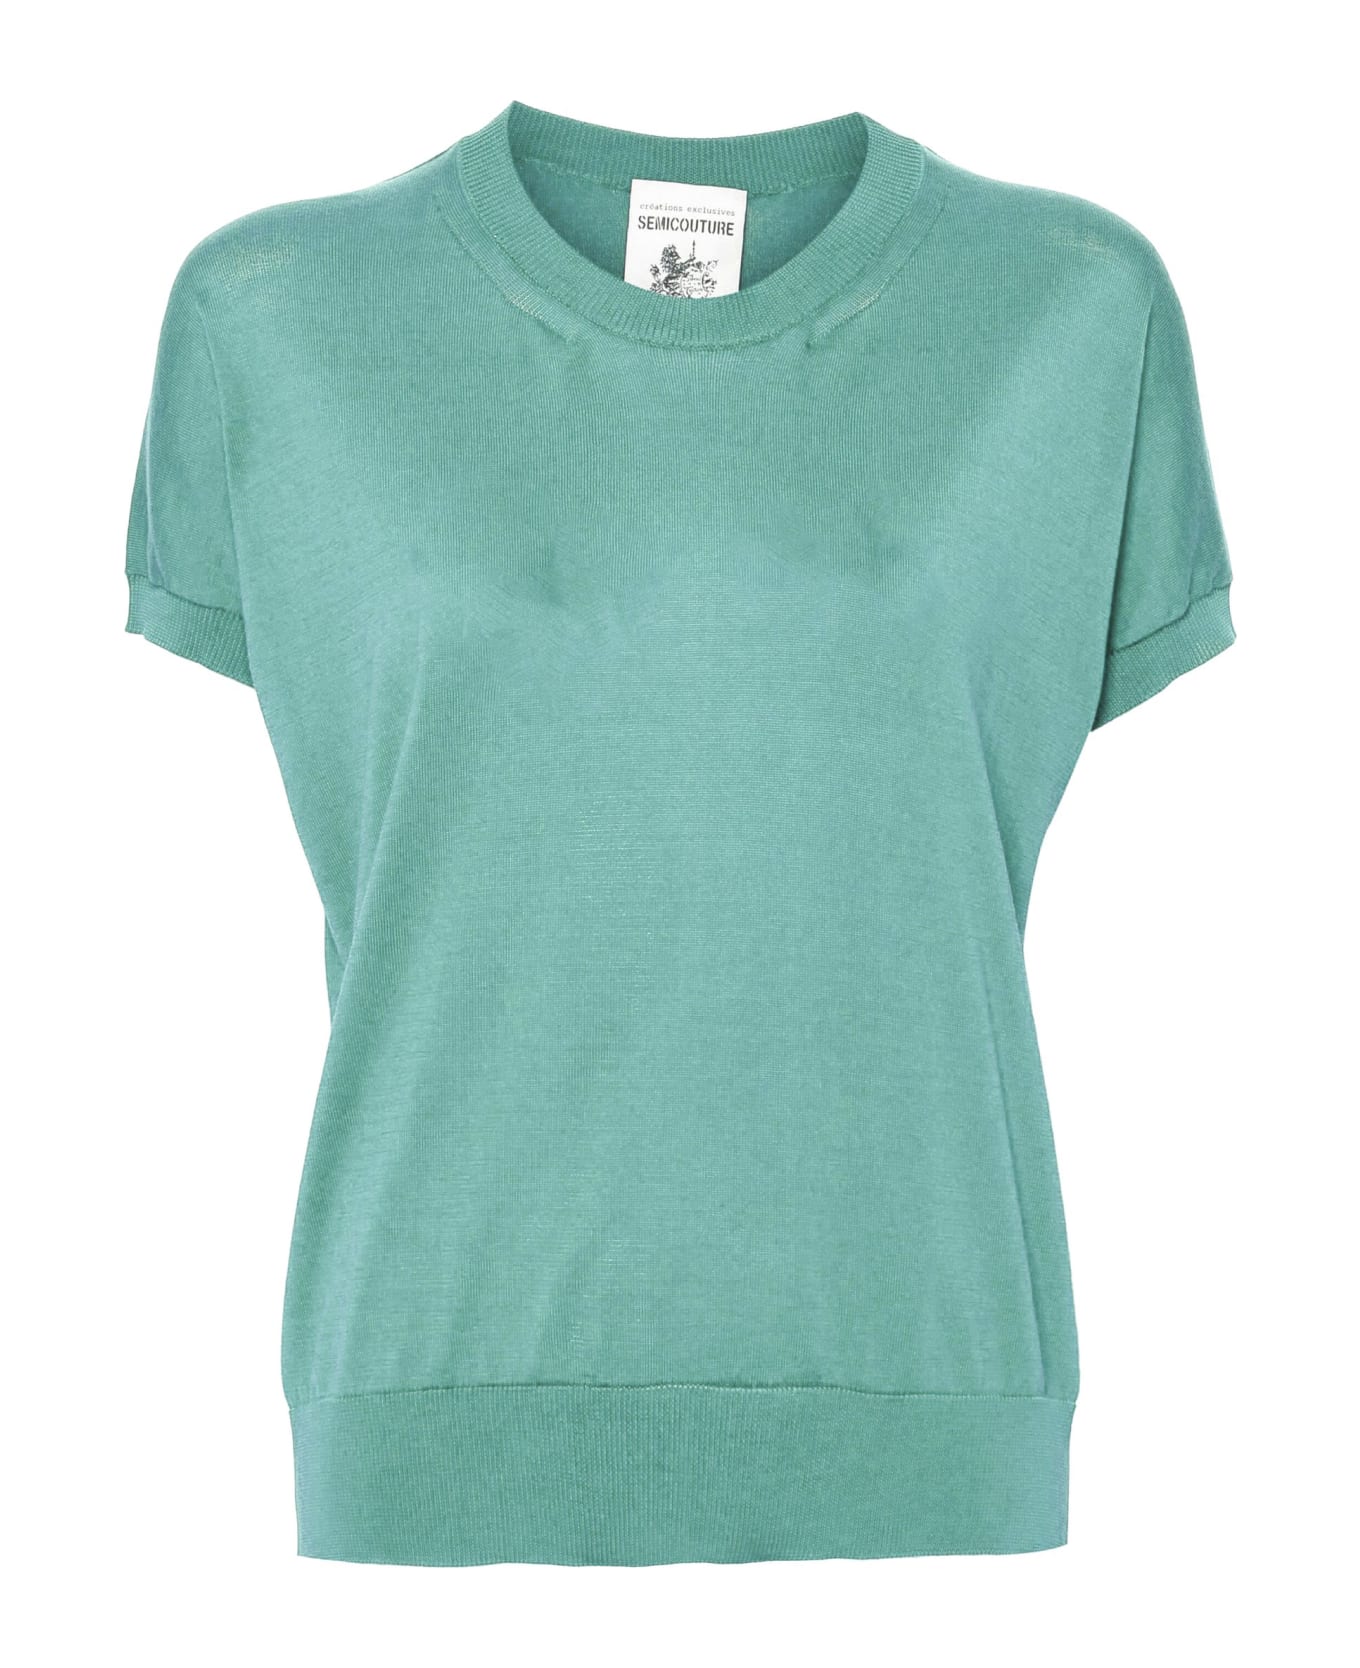 SEMICOUTURE Aquamarine Cotton Sweater - Green Tシャツ